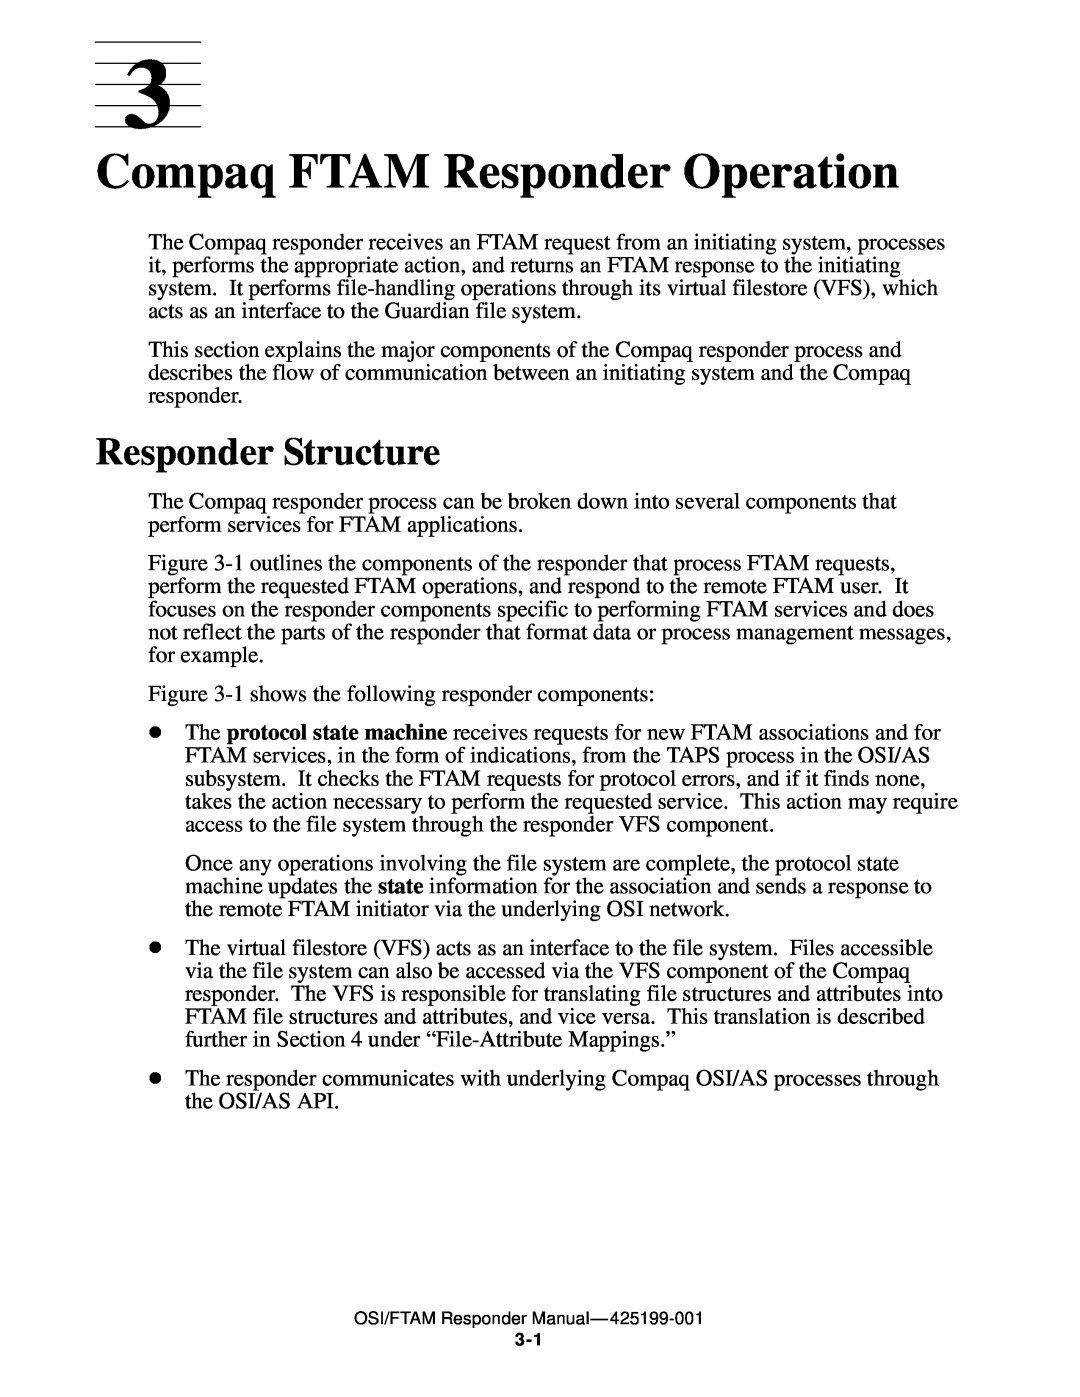 Compaq OSI/FTAM D43, OSI/APLMGR D43 manual Compaq FTAM Responder Operation, Responder Structure 